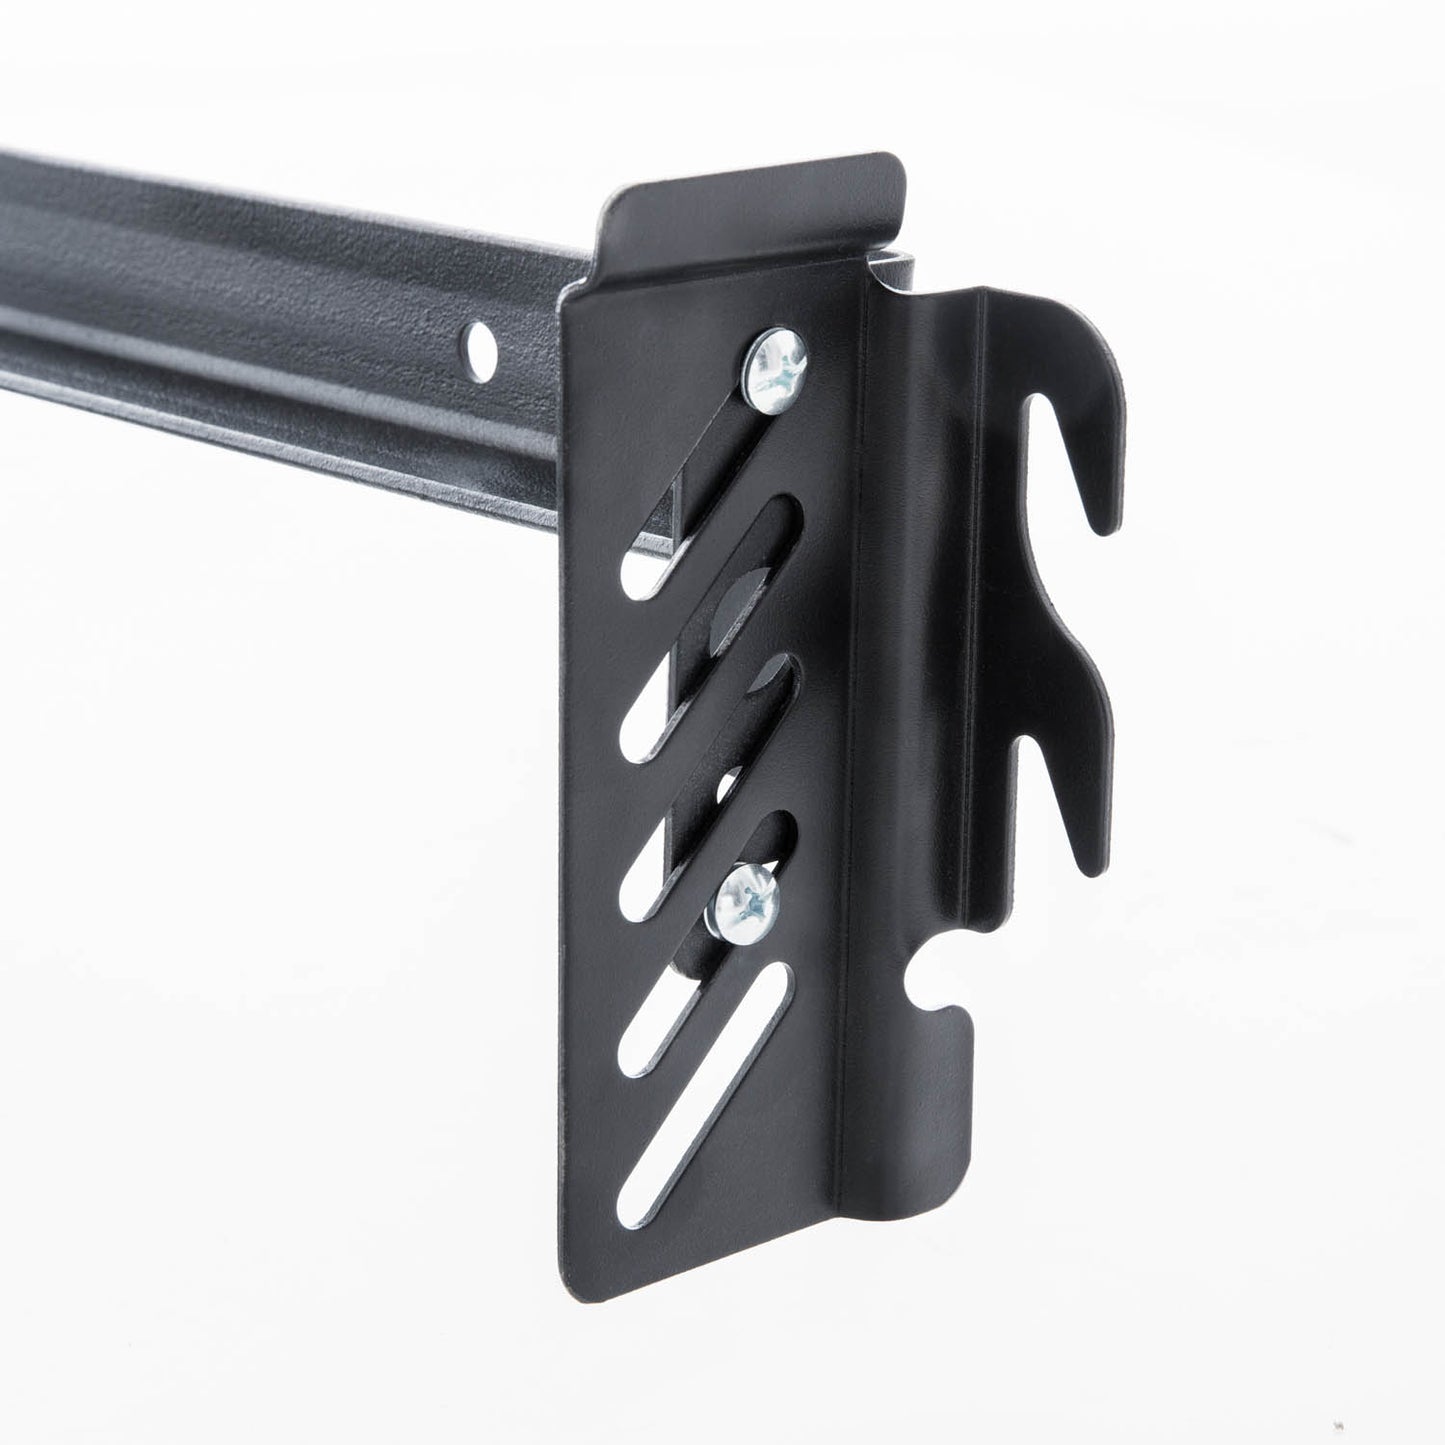 Steelock® Adaptable Hook-In Headboard Footboard Bed Frame